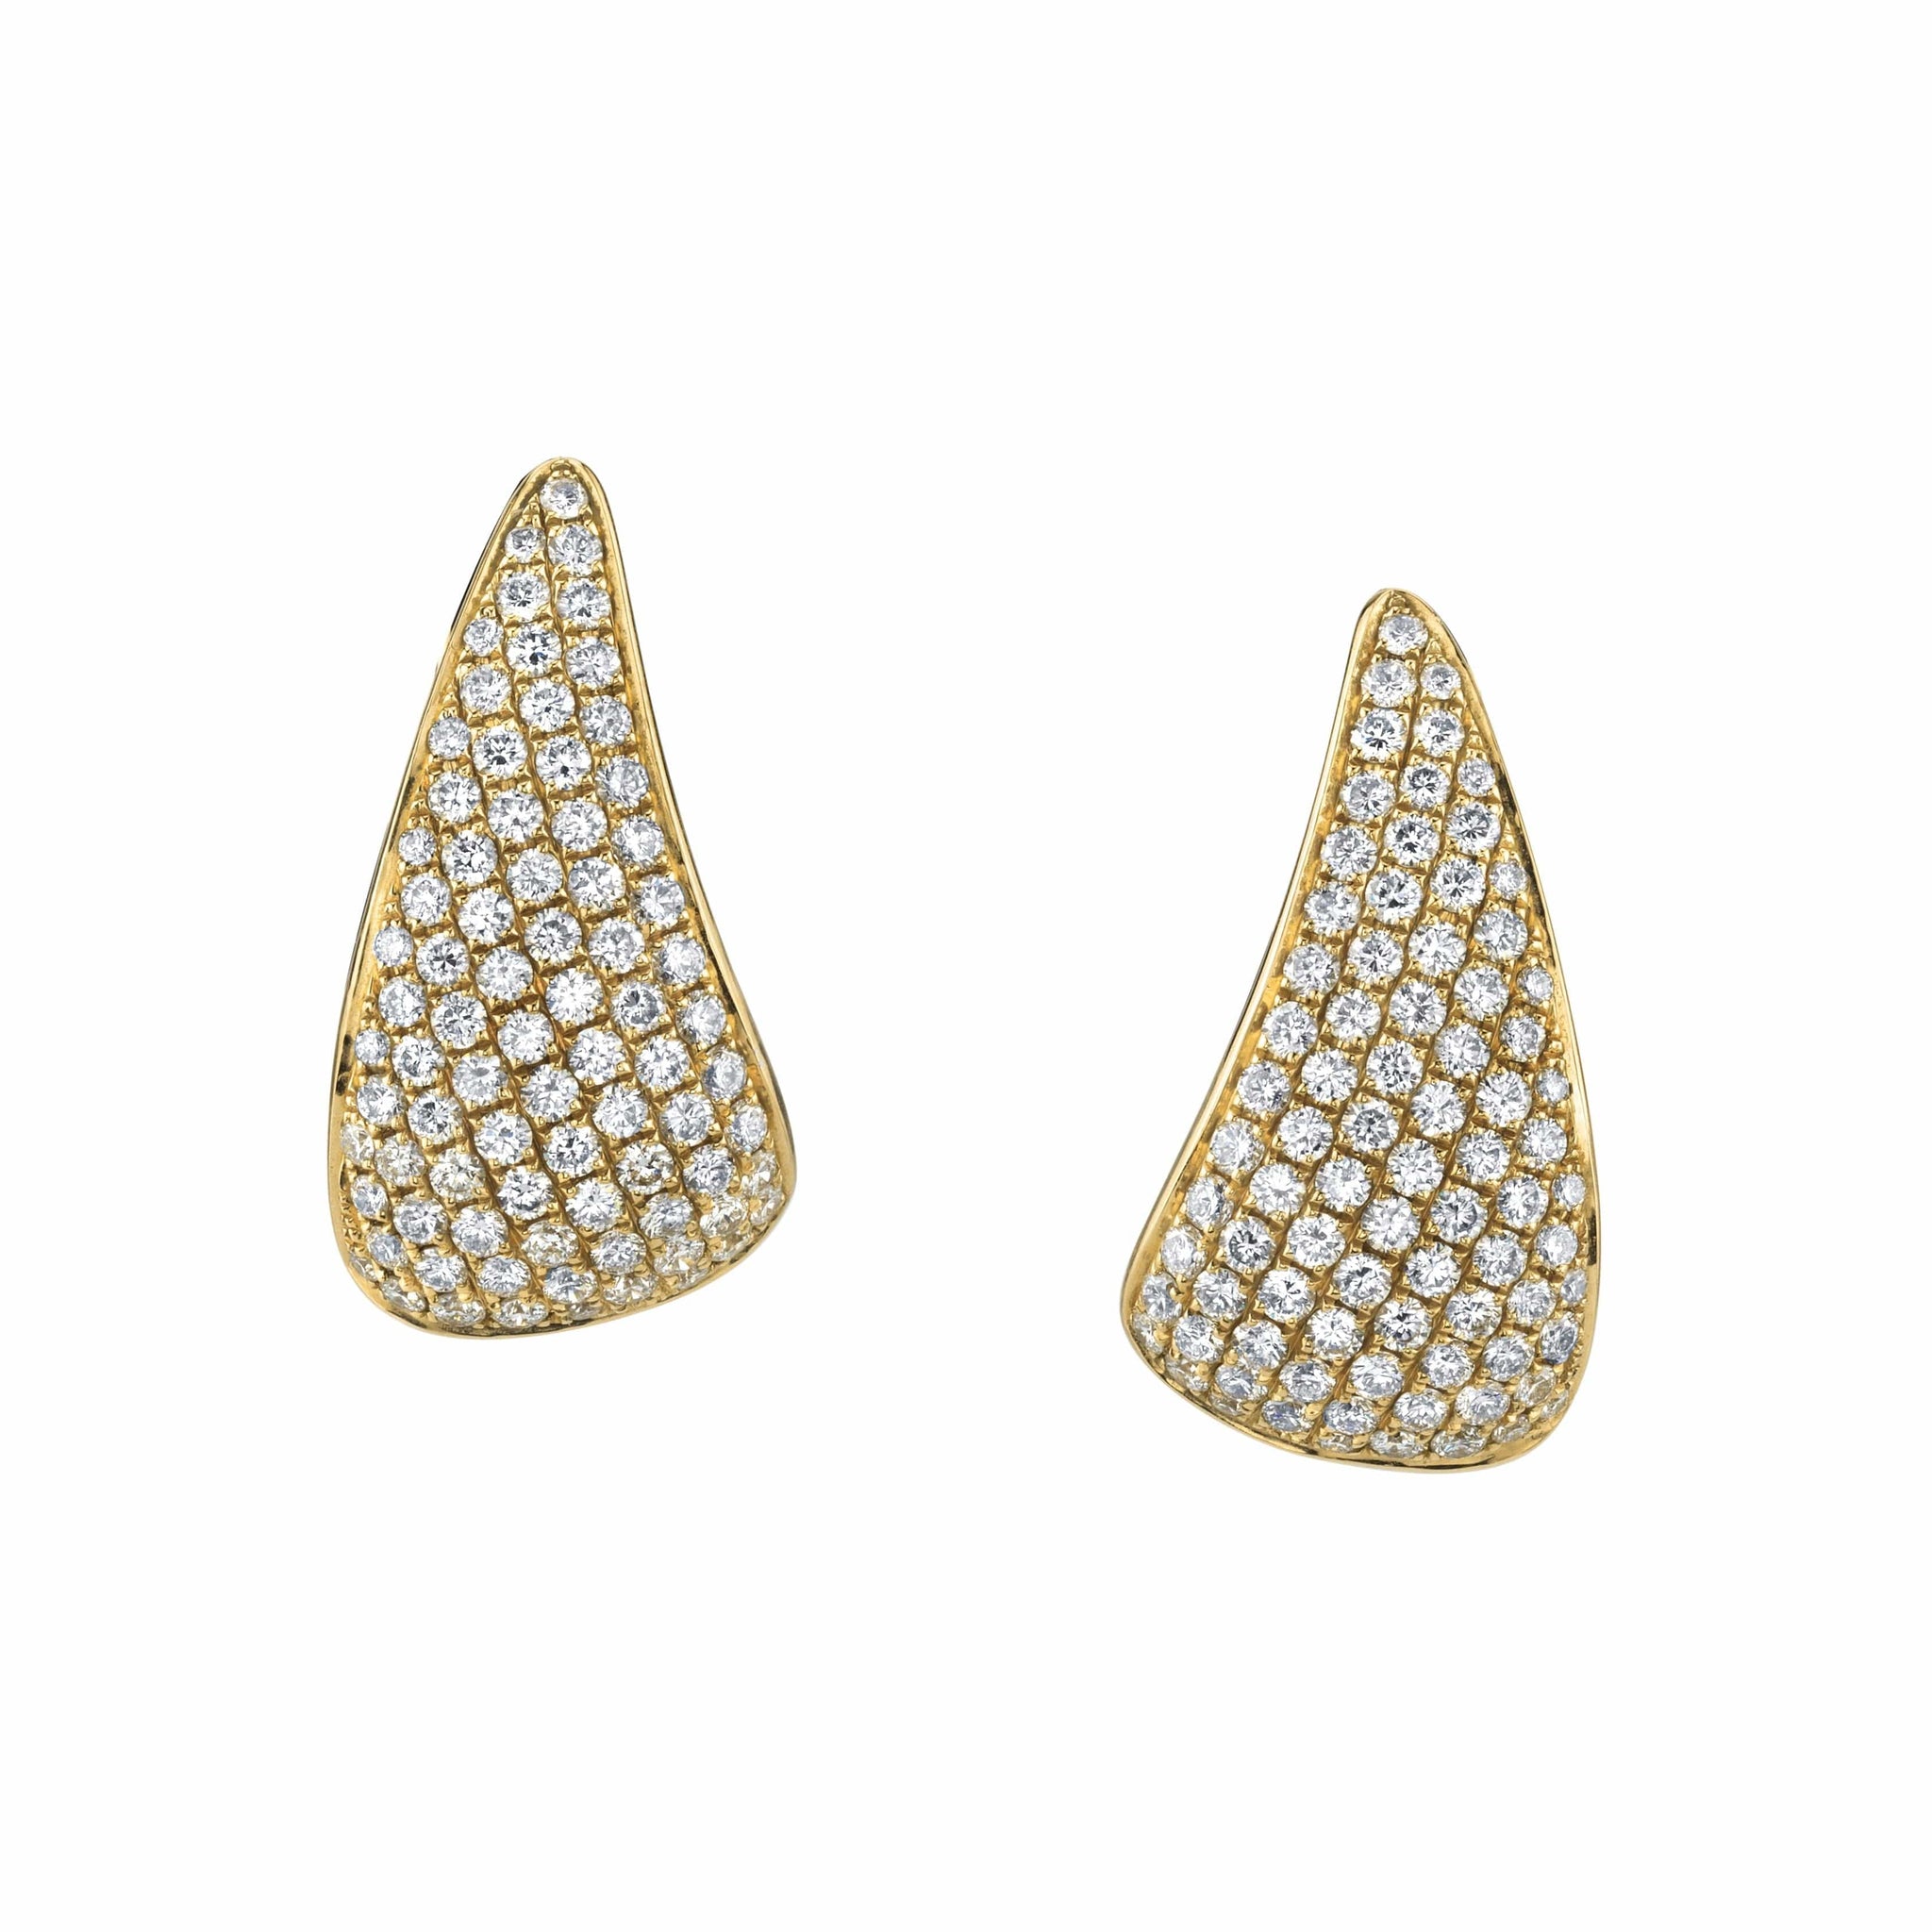 Anita Ko 18K Yellow Gold Pave Diamond Claw Earrings